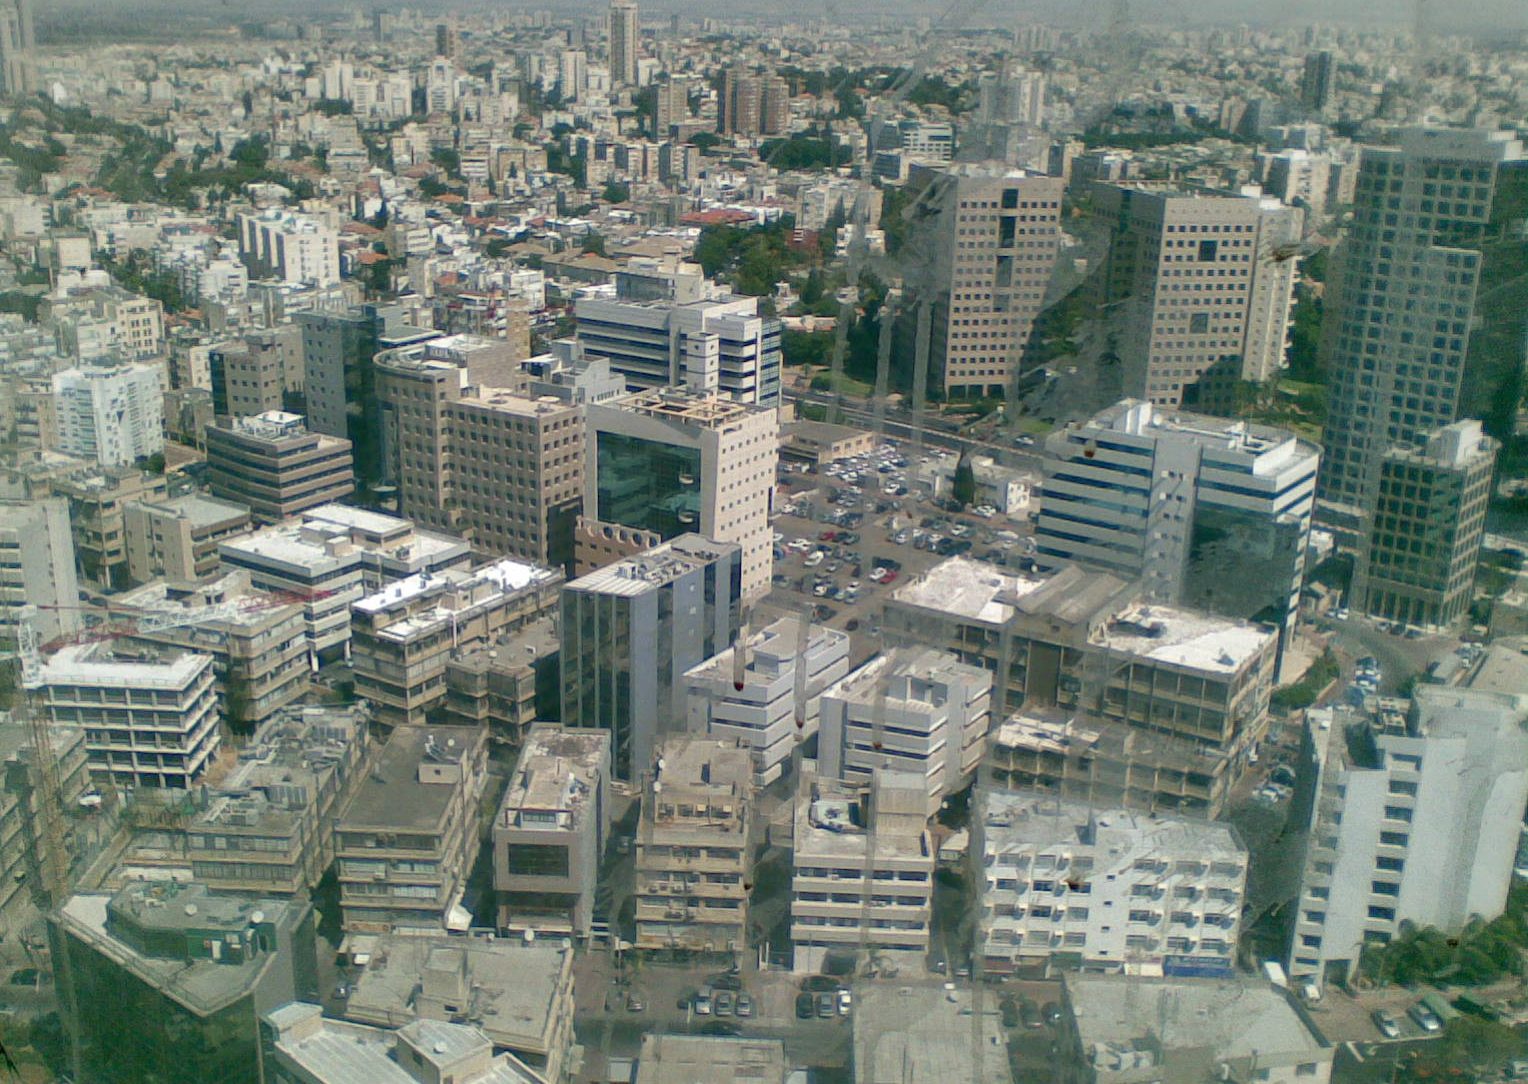 View of Israeli city Ramat Gan from overhead, showing dozens of skyscrapers